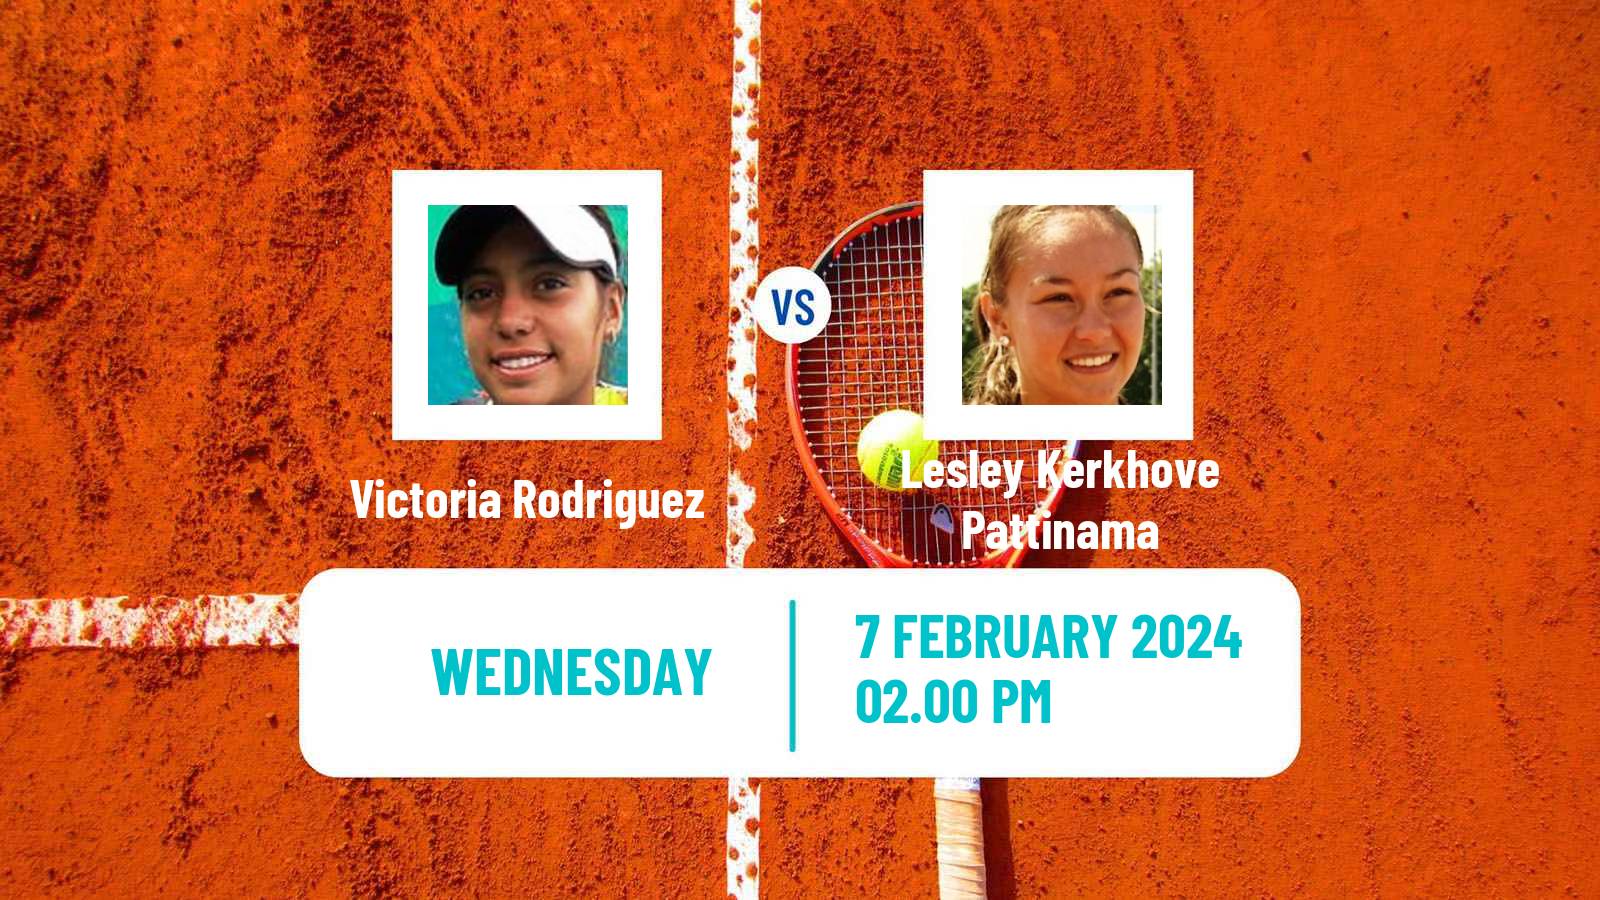 Tennis ITF W100 Irapuato Women Victoria Rodriguez - Lesley Kerkhove Pattinama